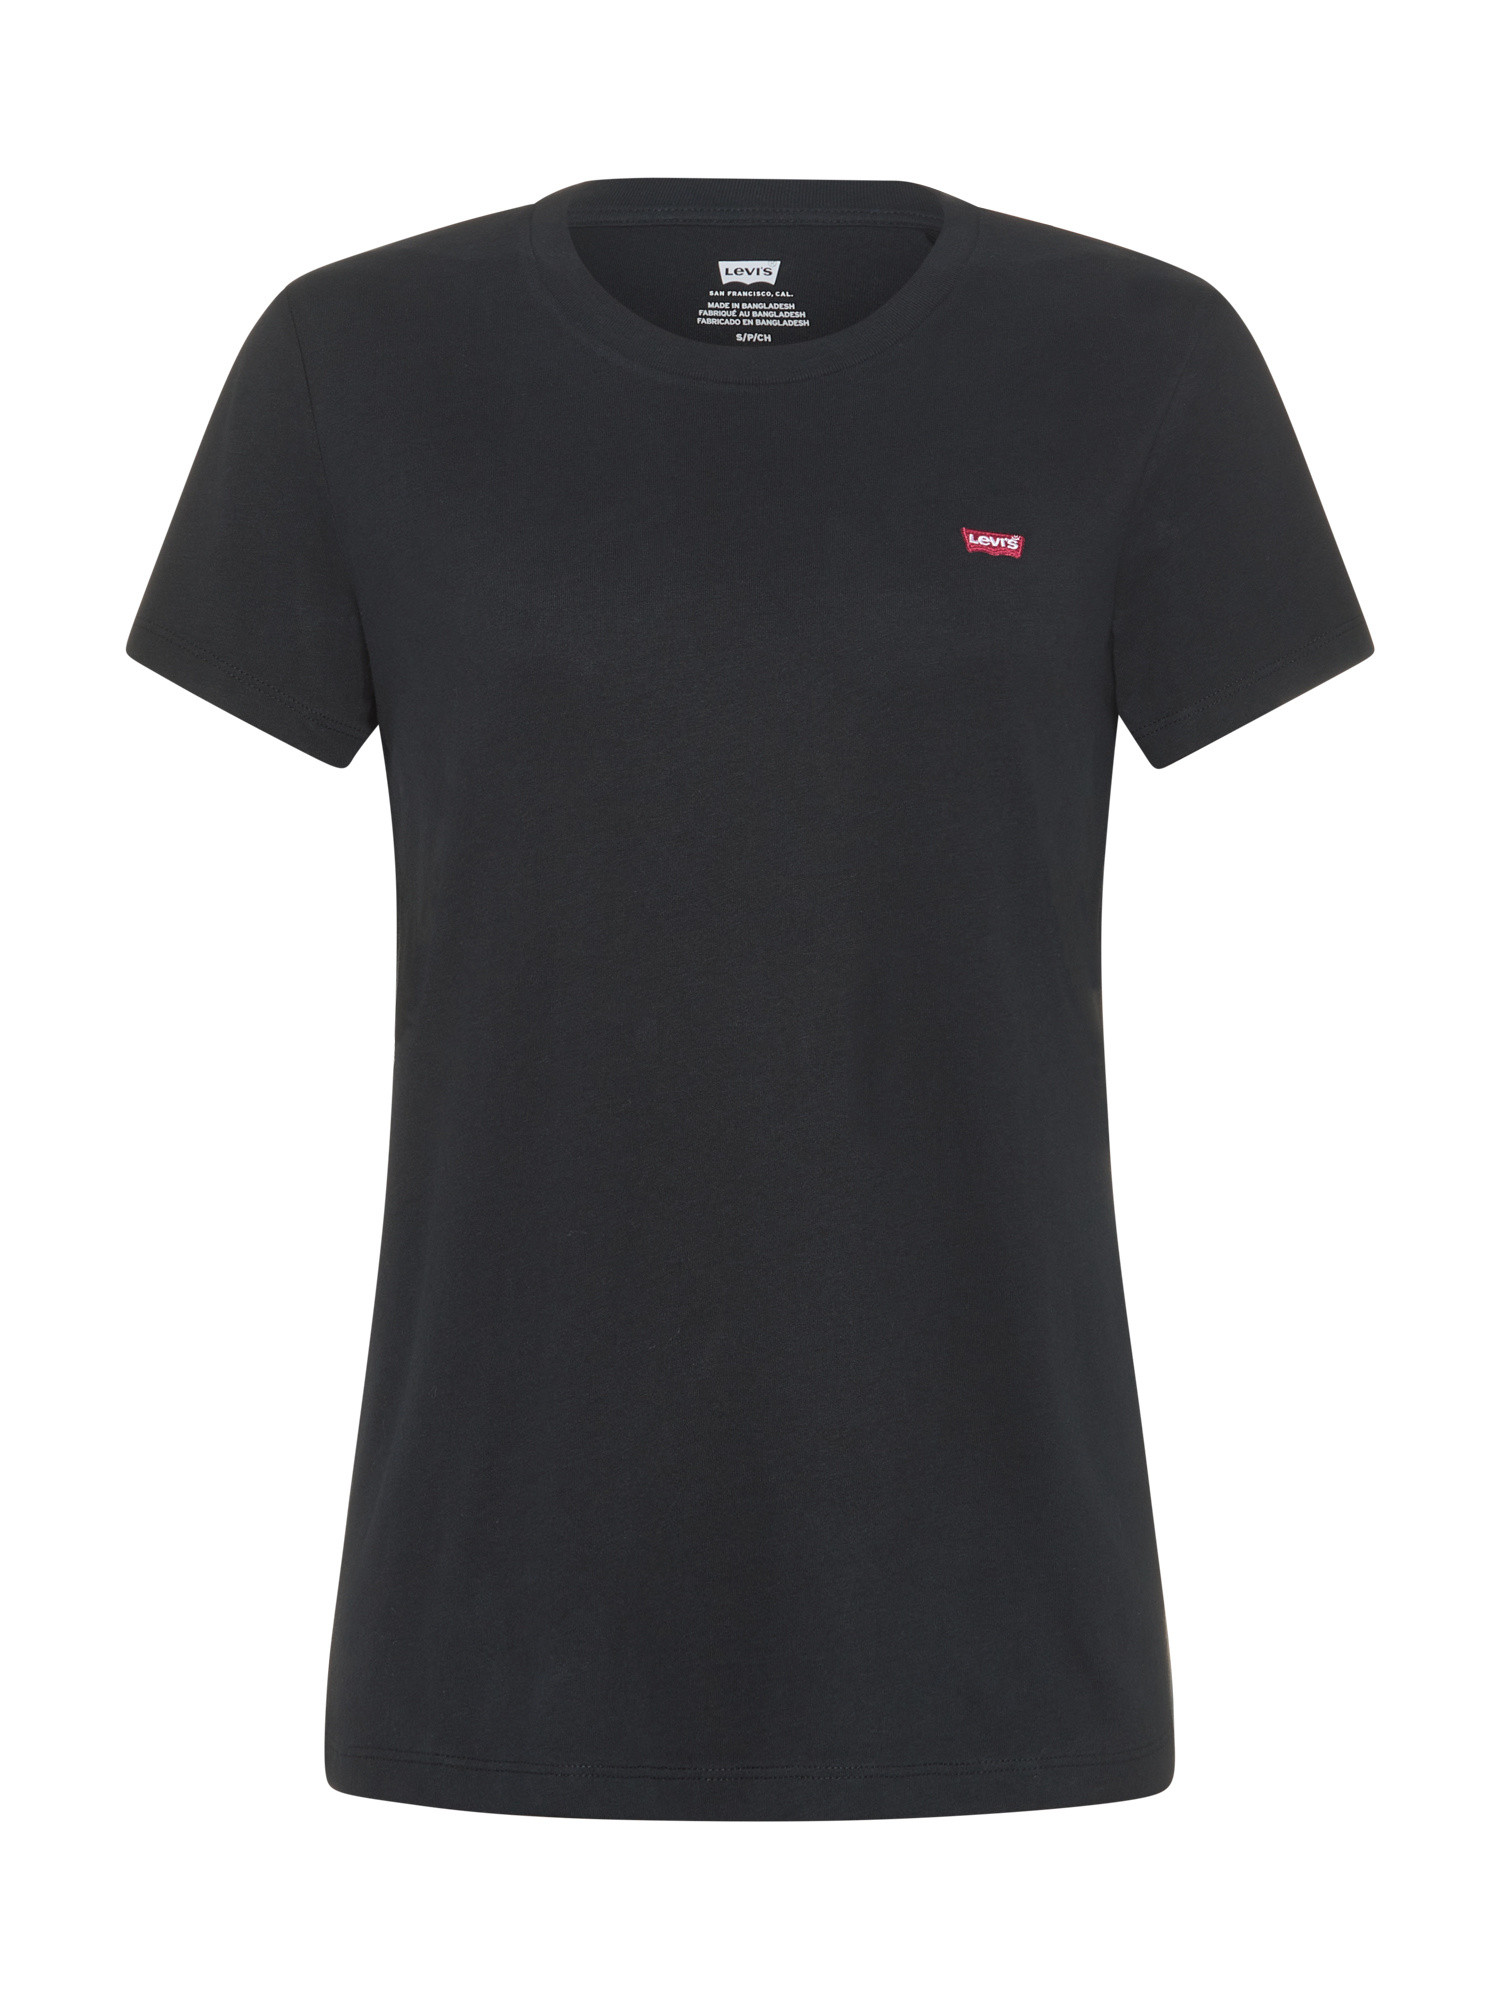 Levi's - Logo T-Shirt, Black, large image number 0